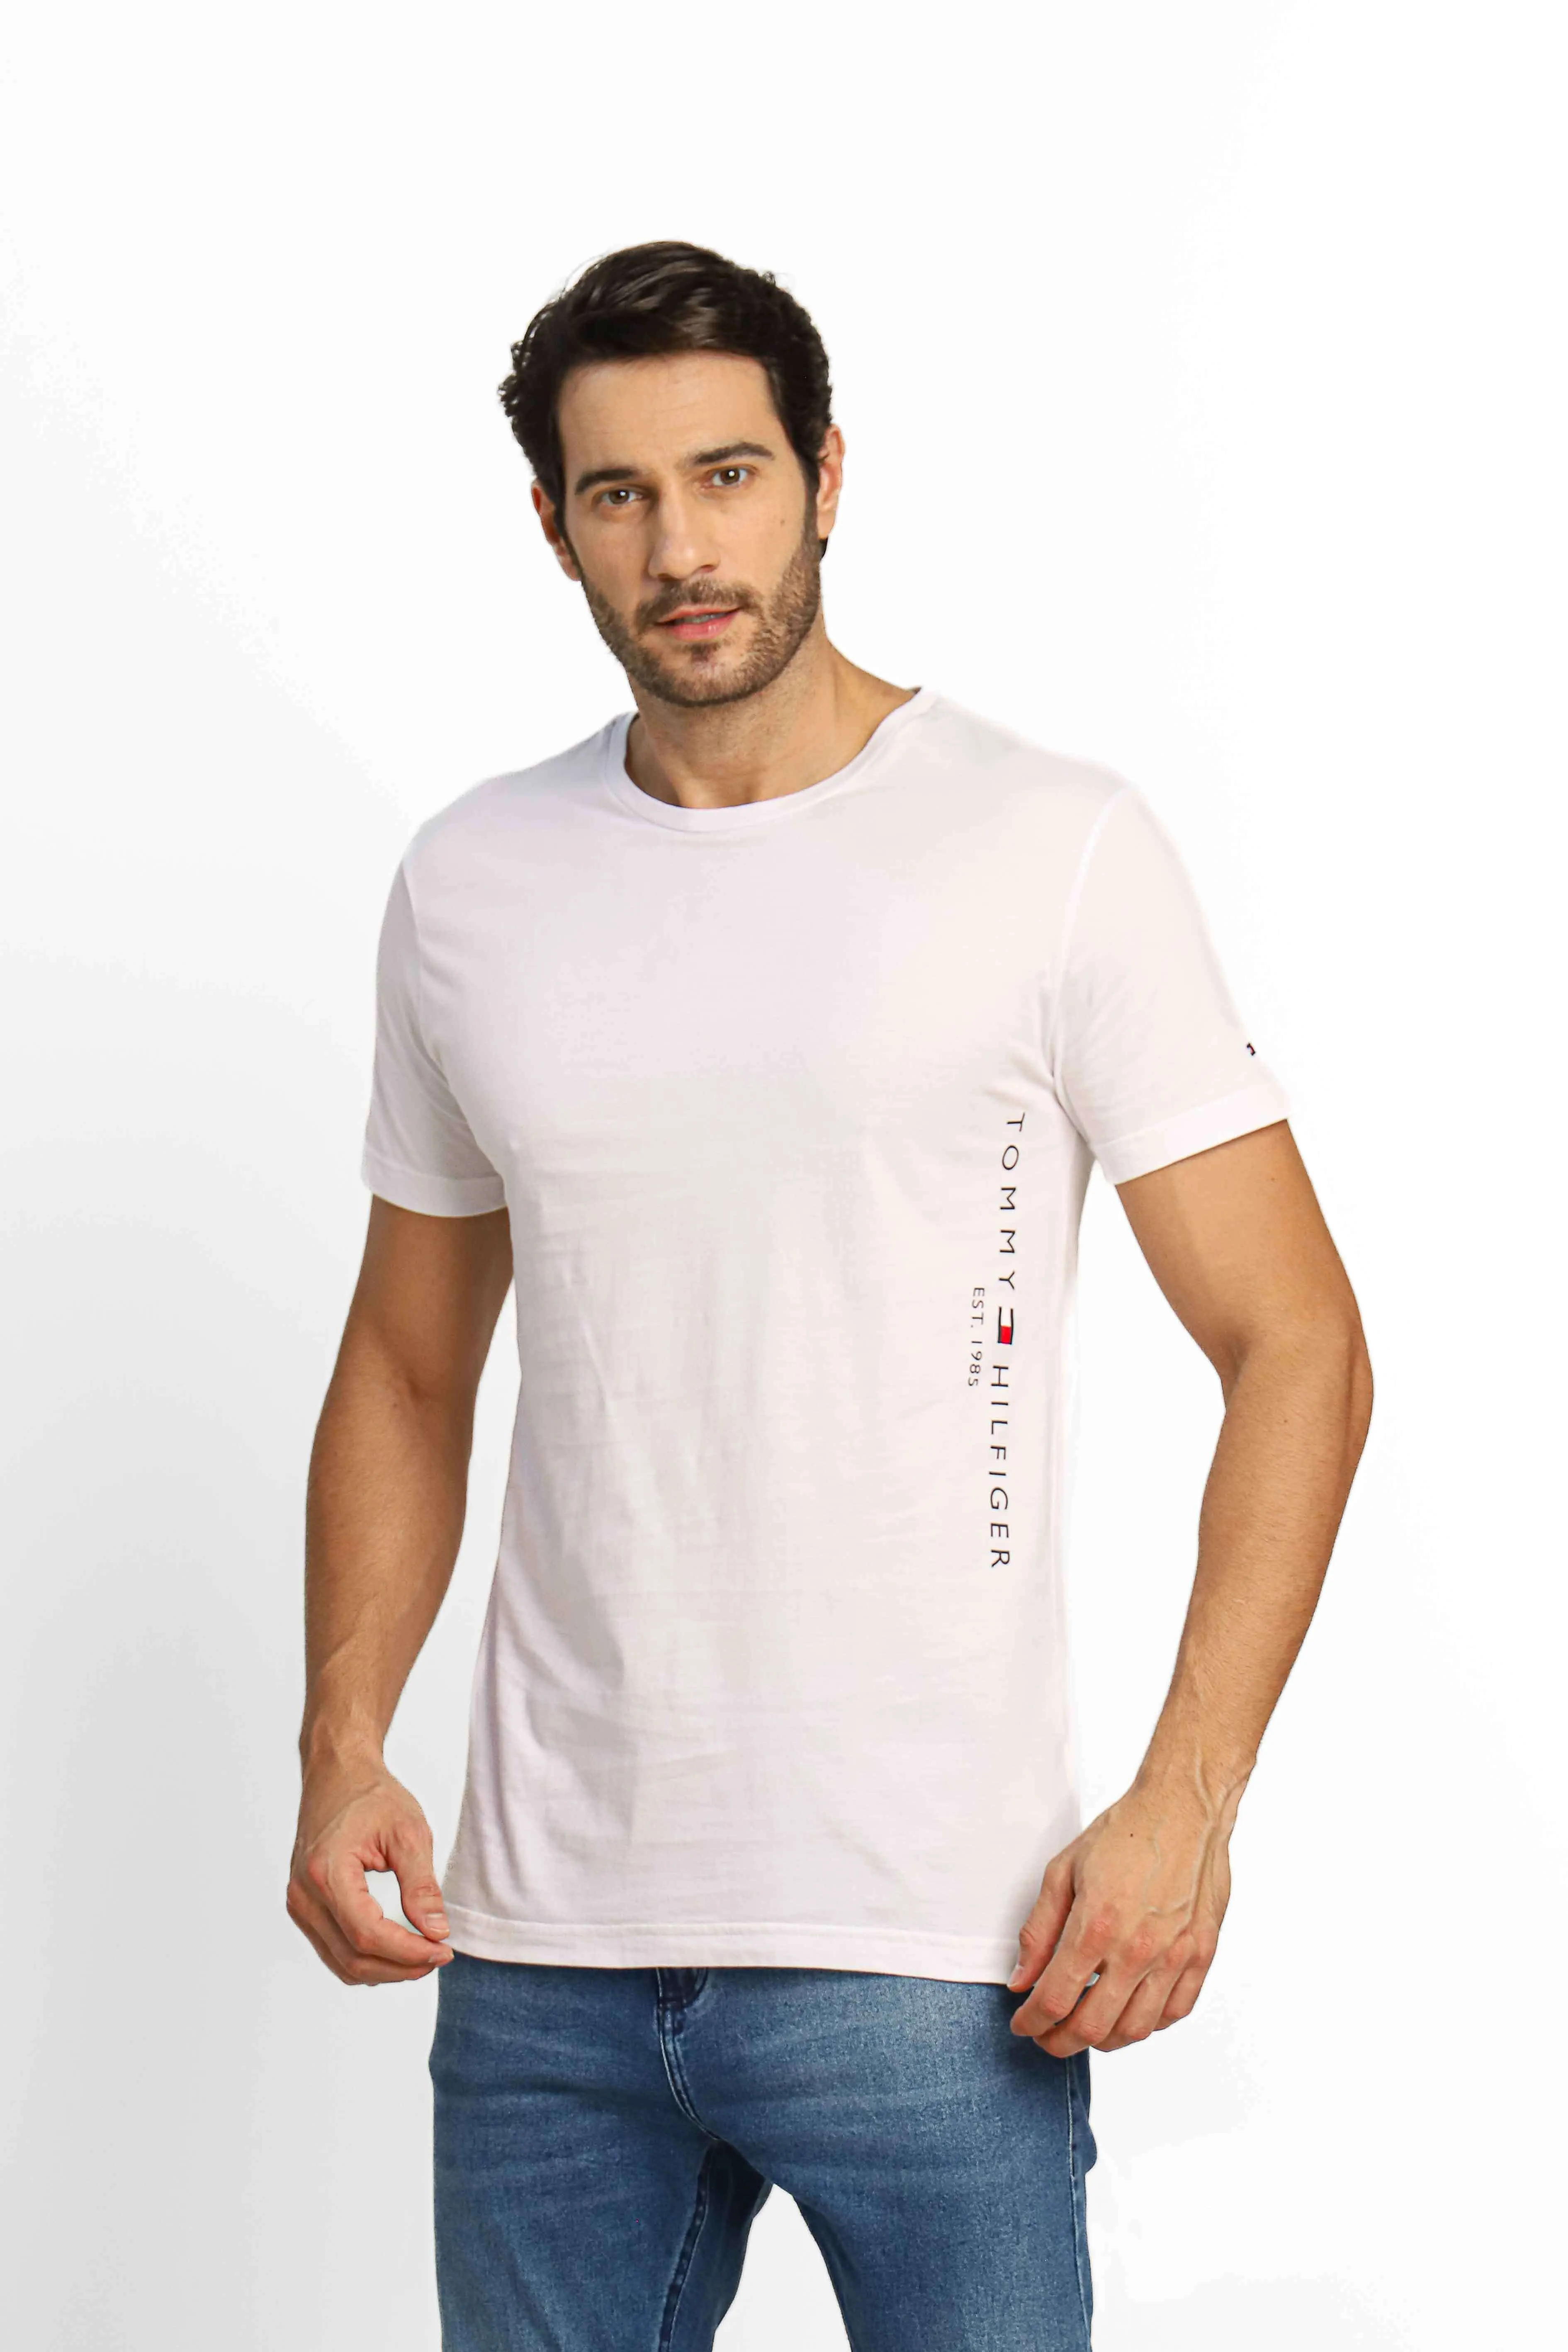 Camiseta Tommy Hilfiger Masculina Global Stripe Chest Branca - Compre Agora